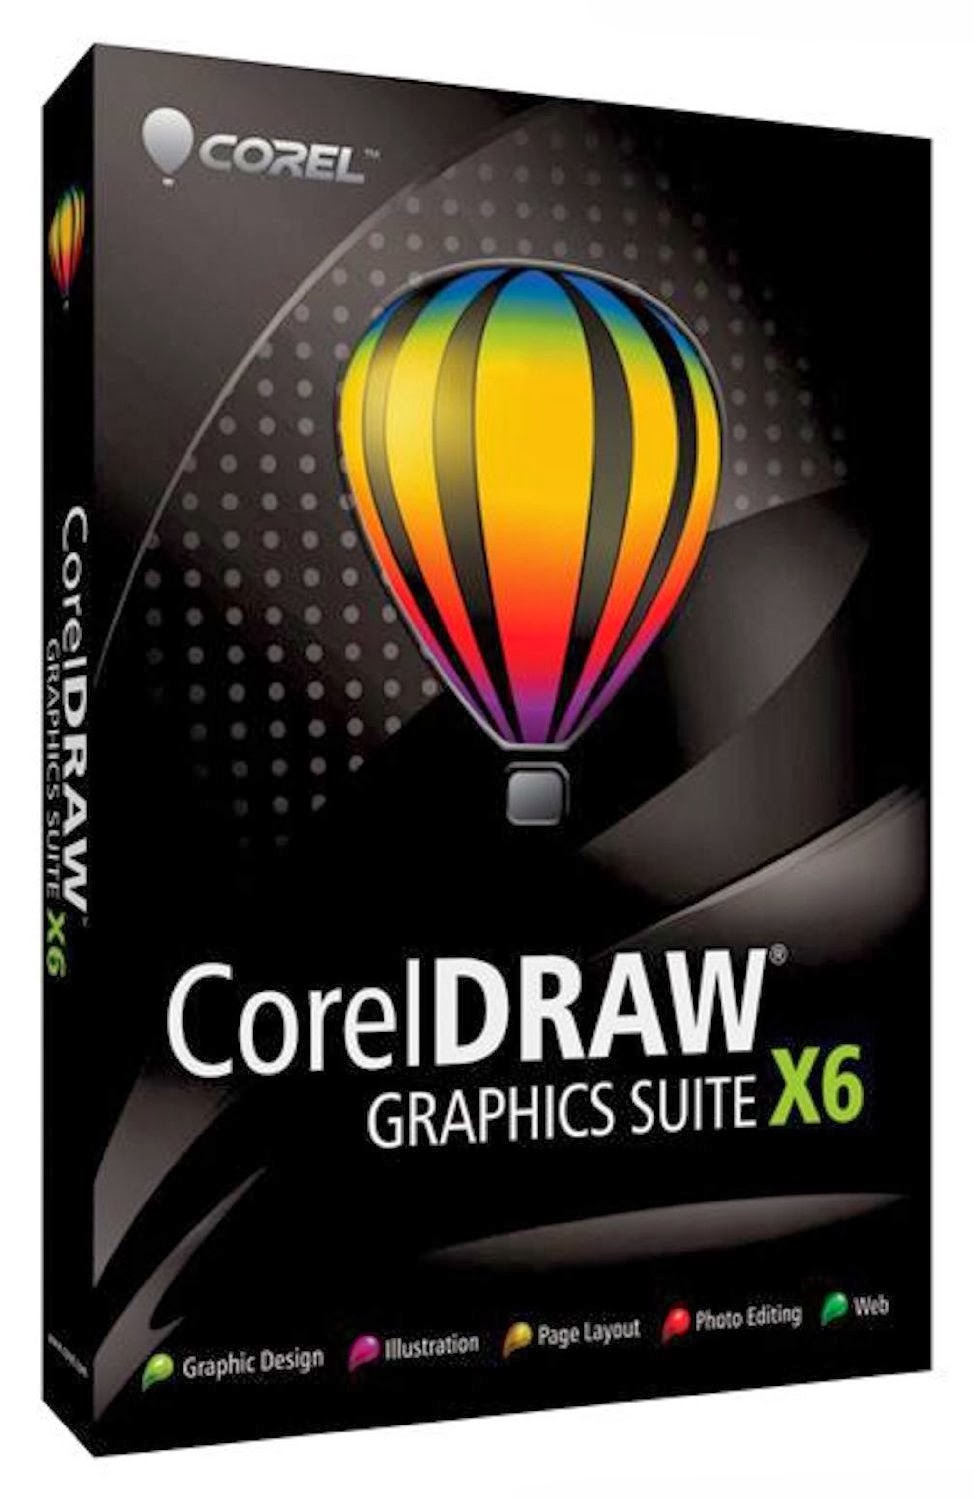 coreldraw graphics suite